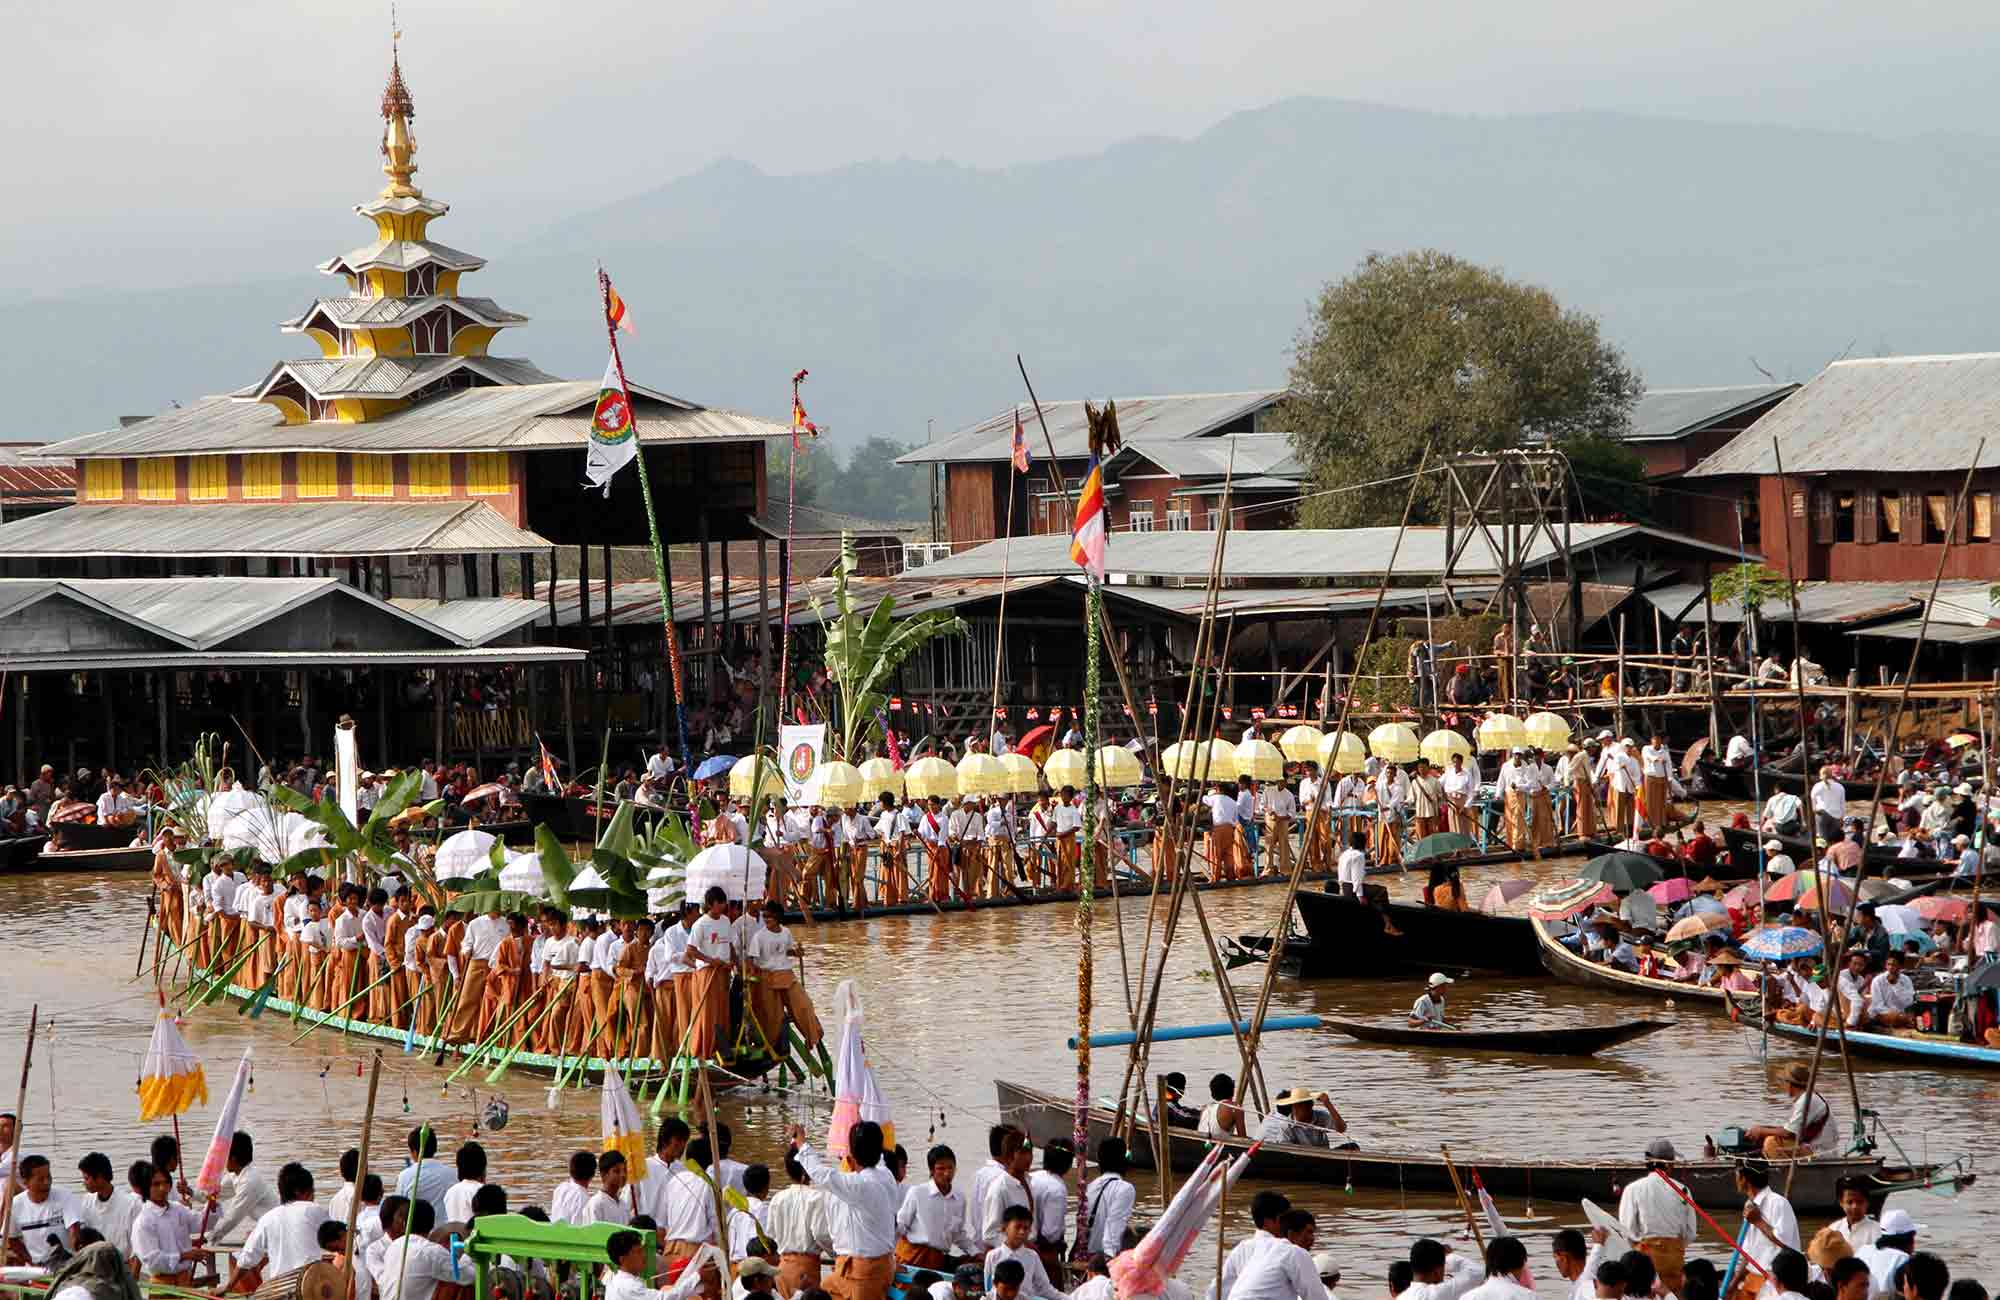 Voyage Birmanie-Myanmar - Fête pêcheurs lac Inle - Amplitudes